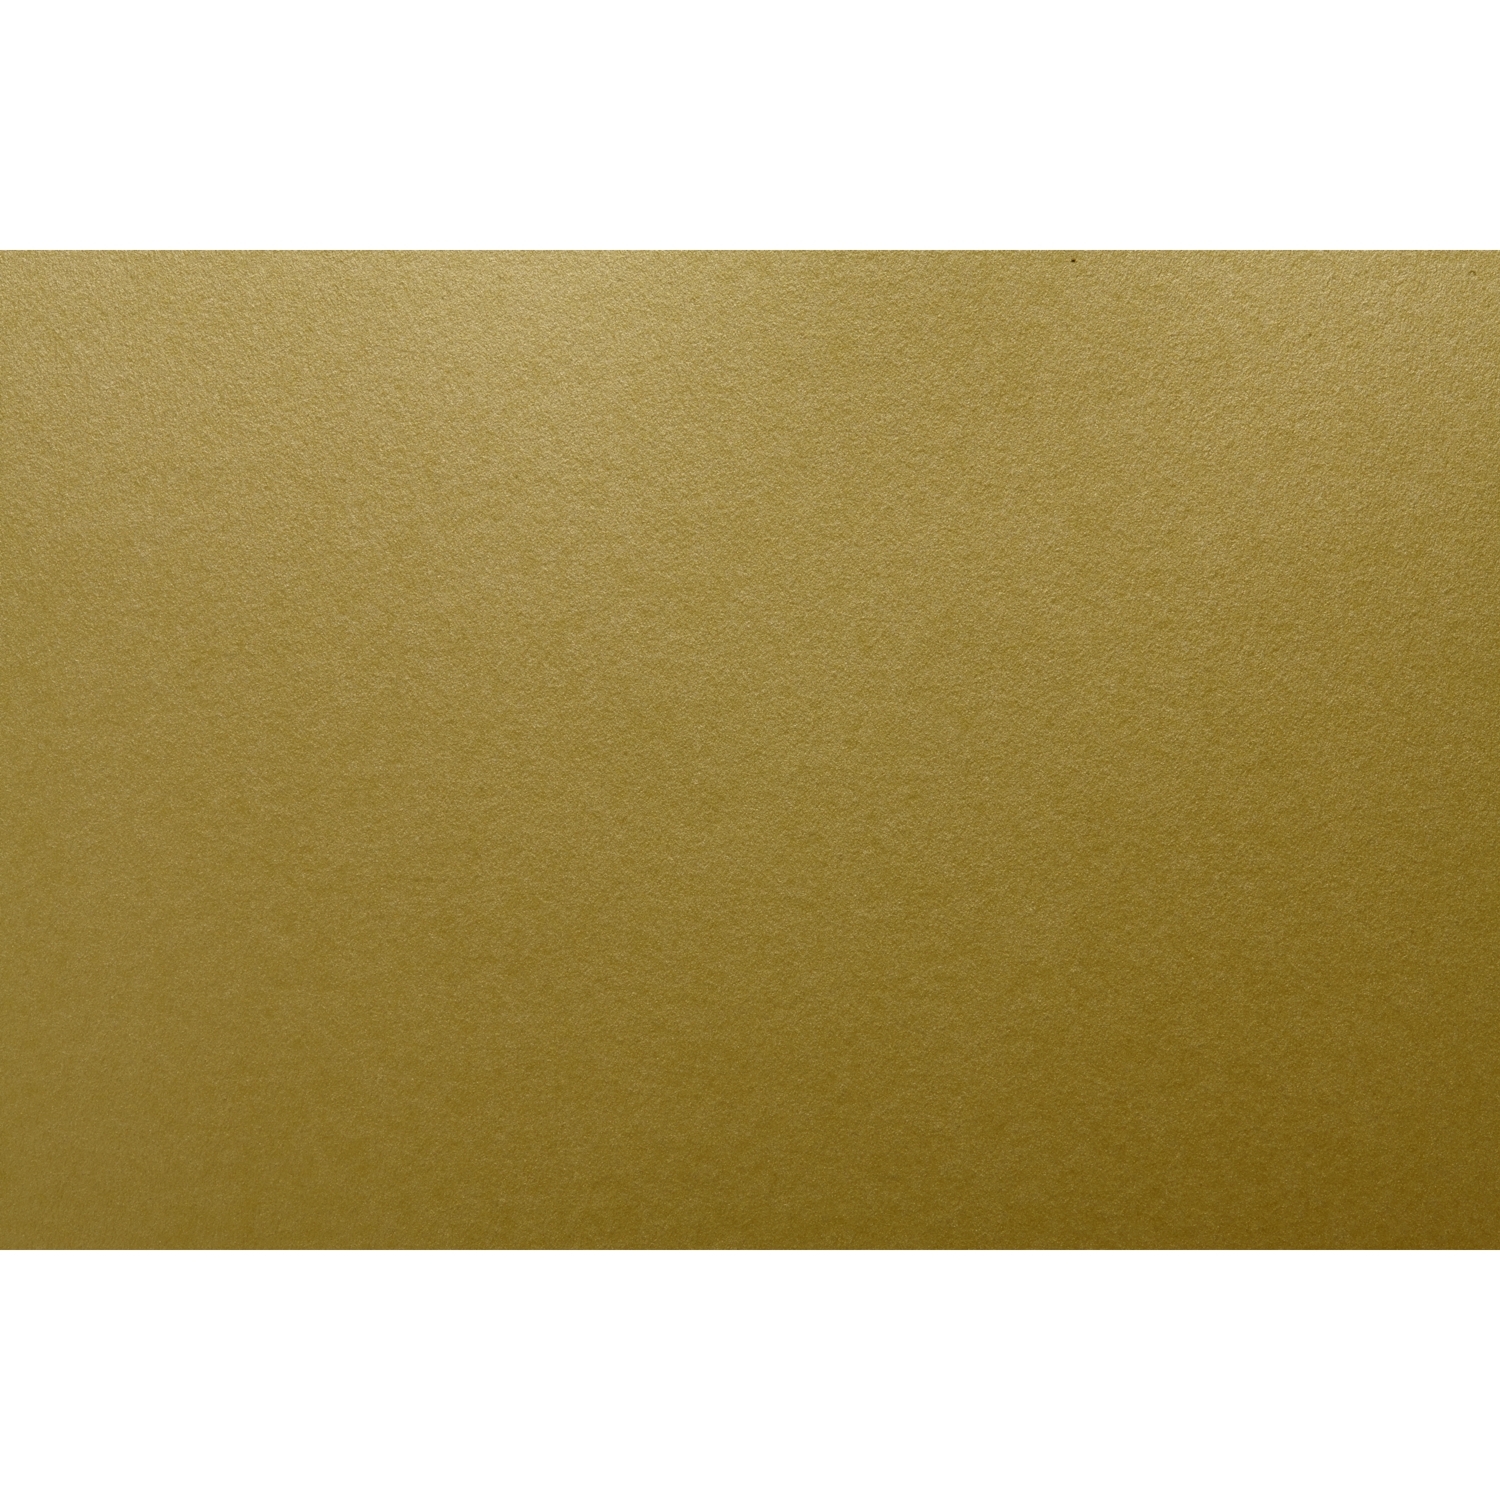 Slater Harrison Colourcard - Gold Image